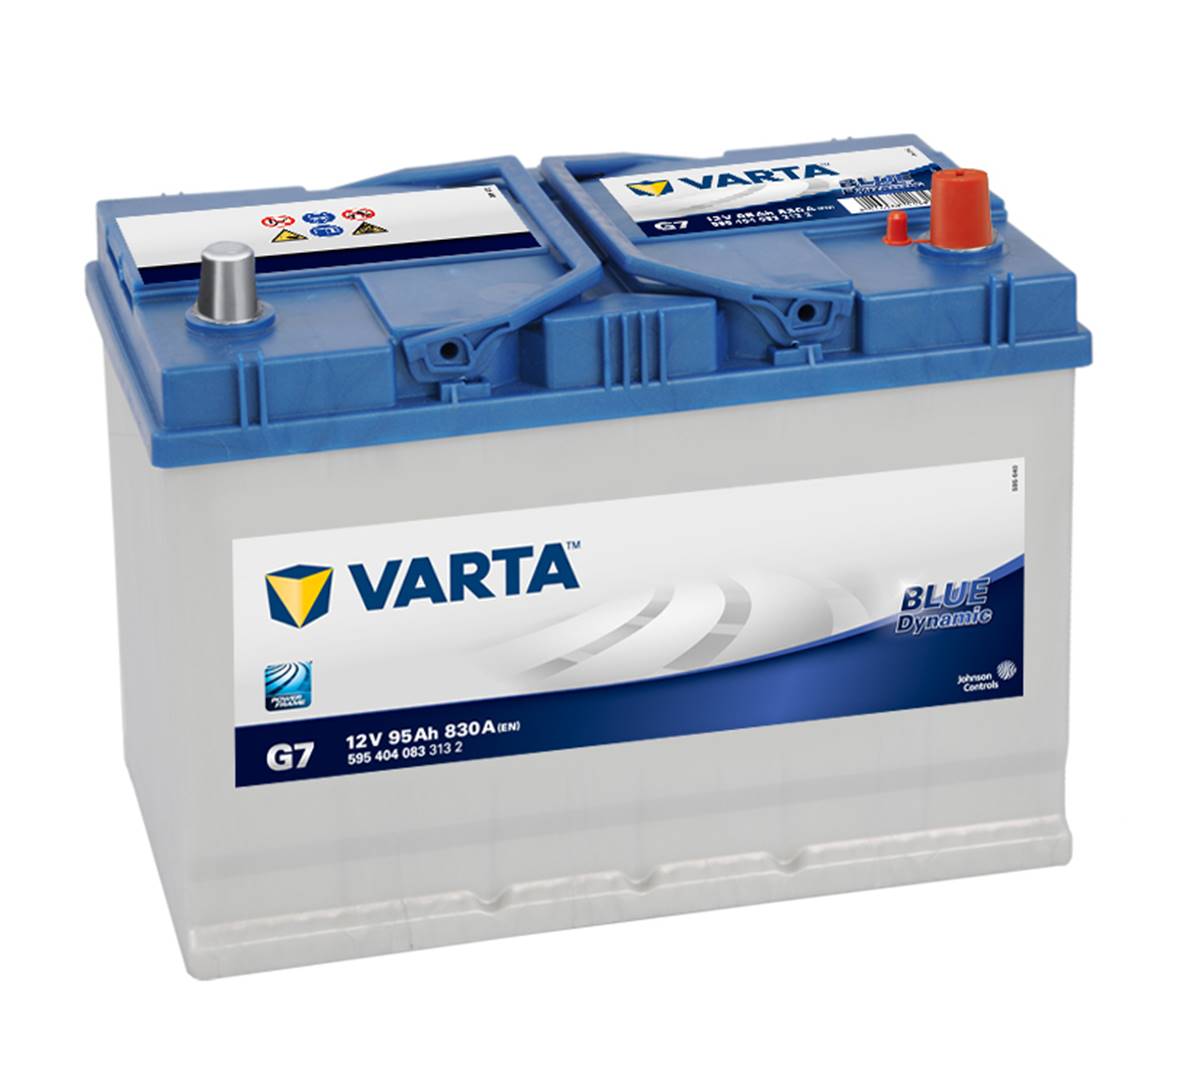 Batterie auto G7 12V 95/830 VARTA Blue dynamic, batterie de